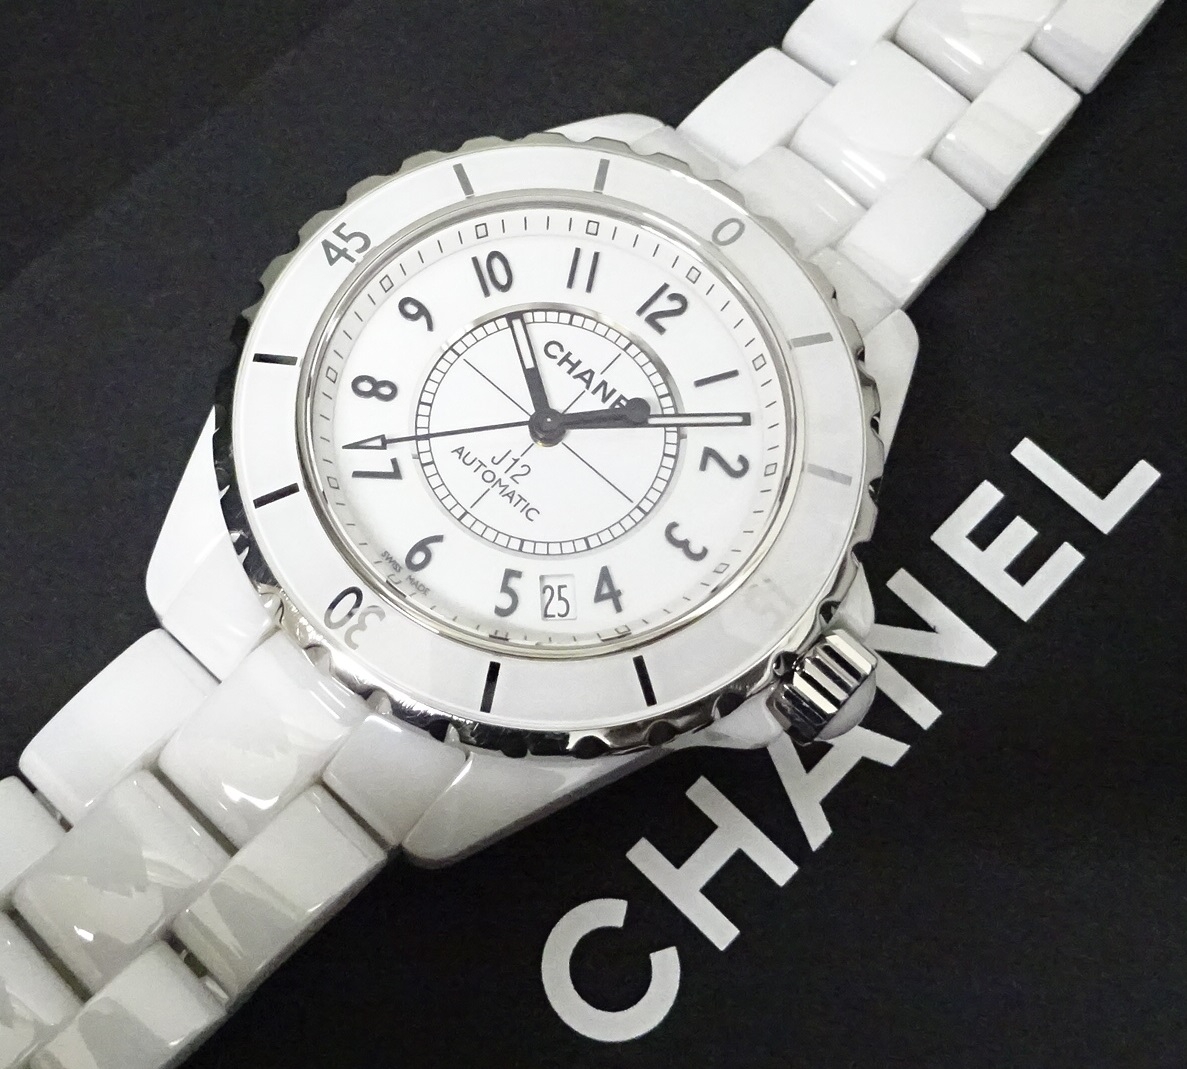 CHANEL シャネル J12 38mm H0970 デイト 白 ホワイト セラミック SS ステンレス メンズ 自動巻き【6ヶ月保証】【腕時計】